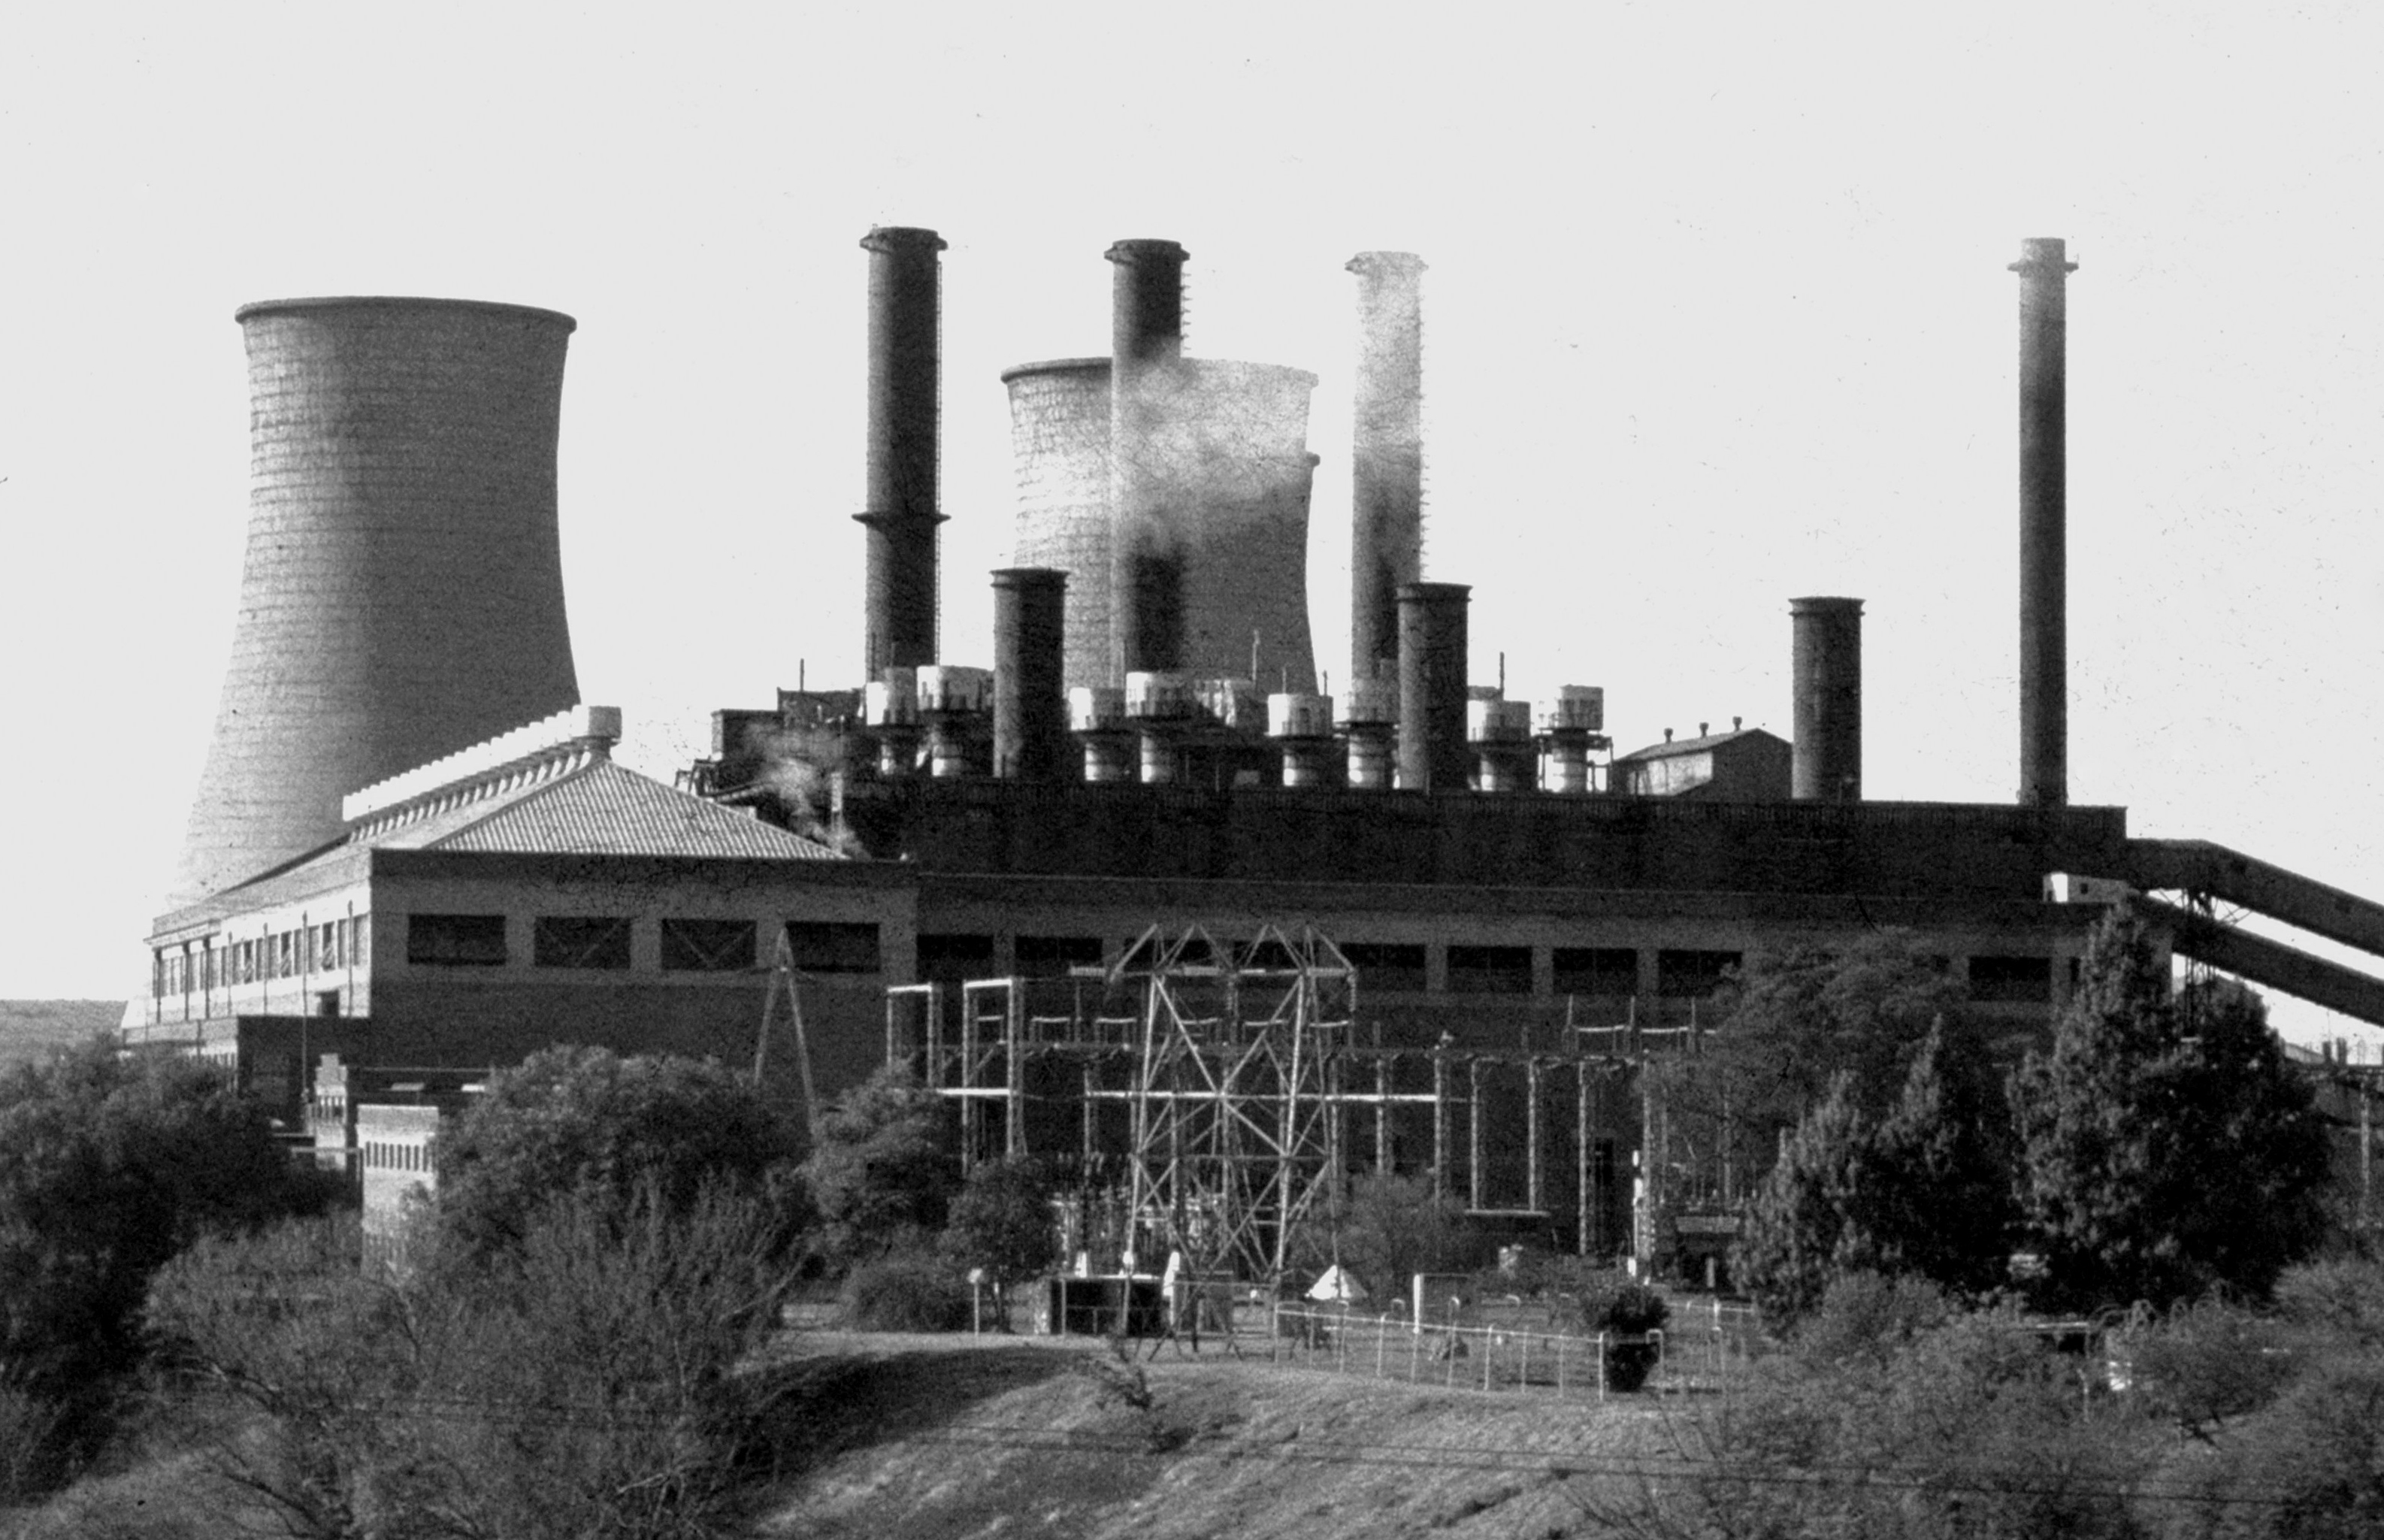 Colenso Power Station Image public domain